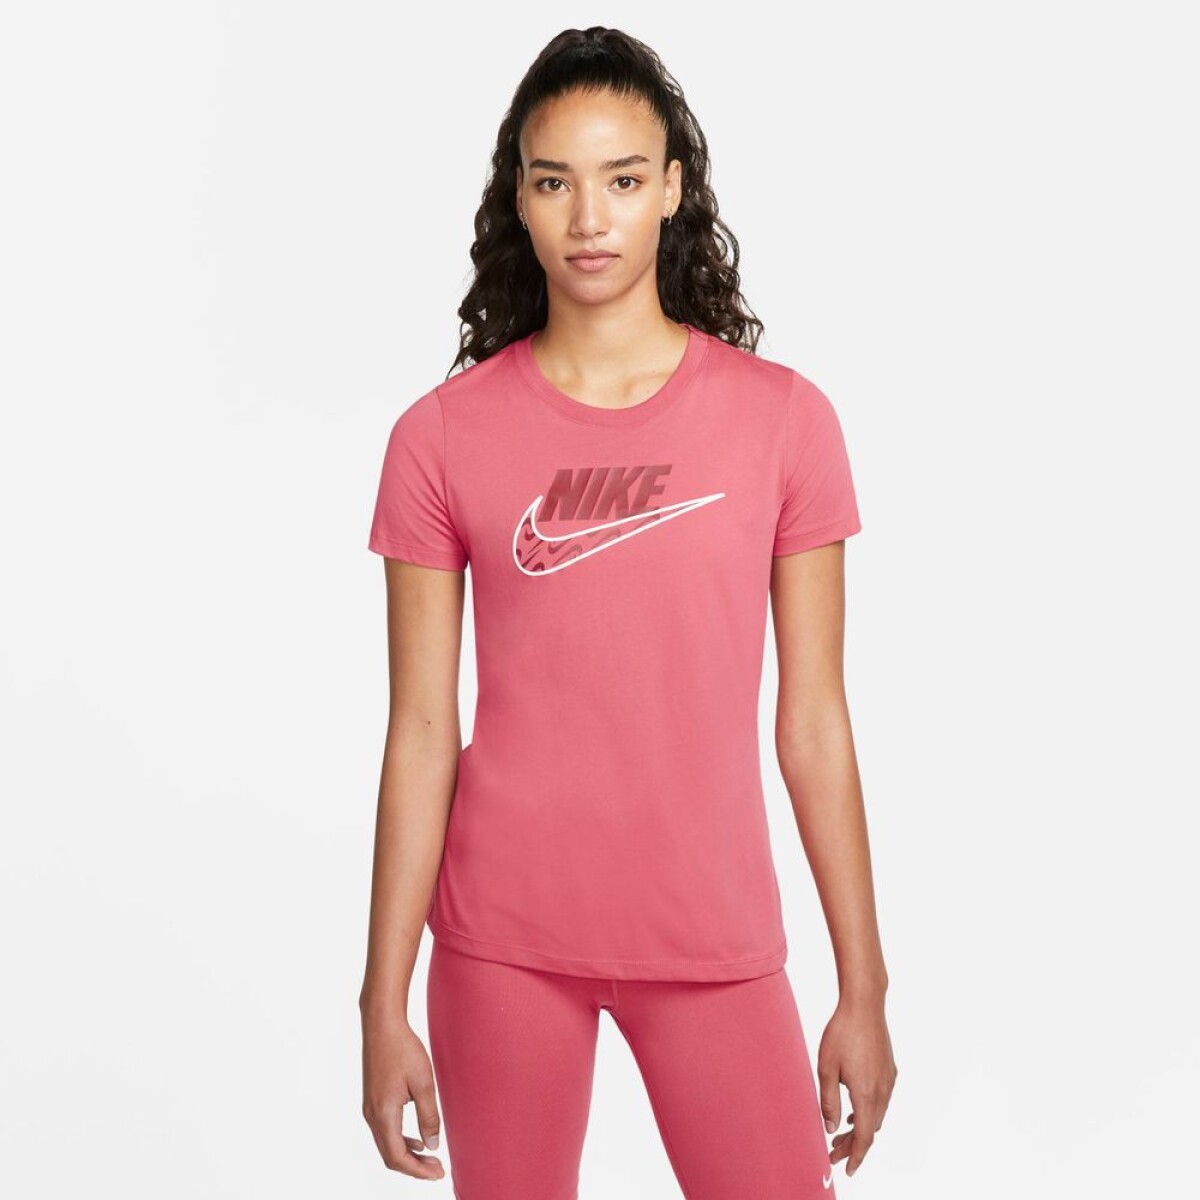 Remera Nike Moda Dama Tee Icon - Color Único 